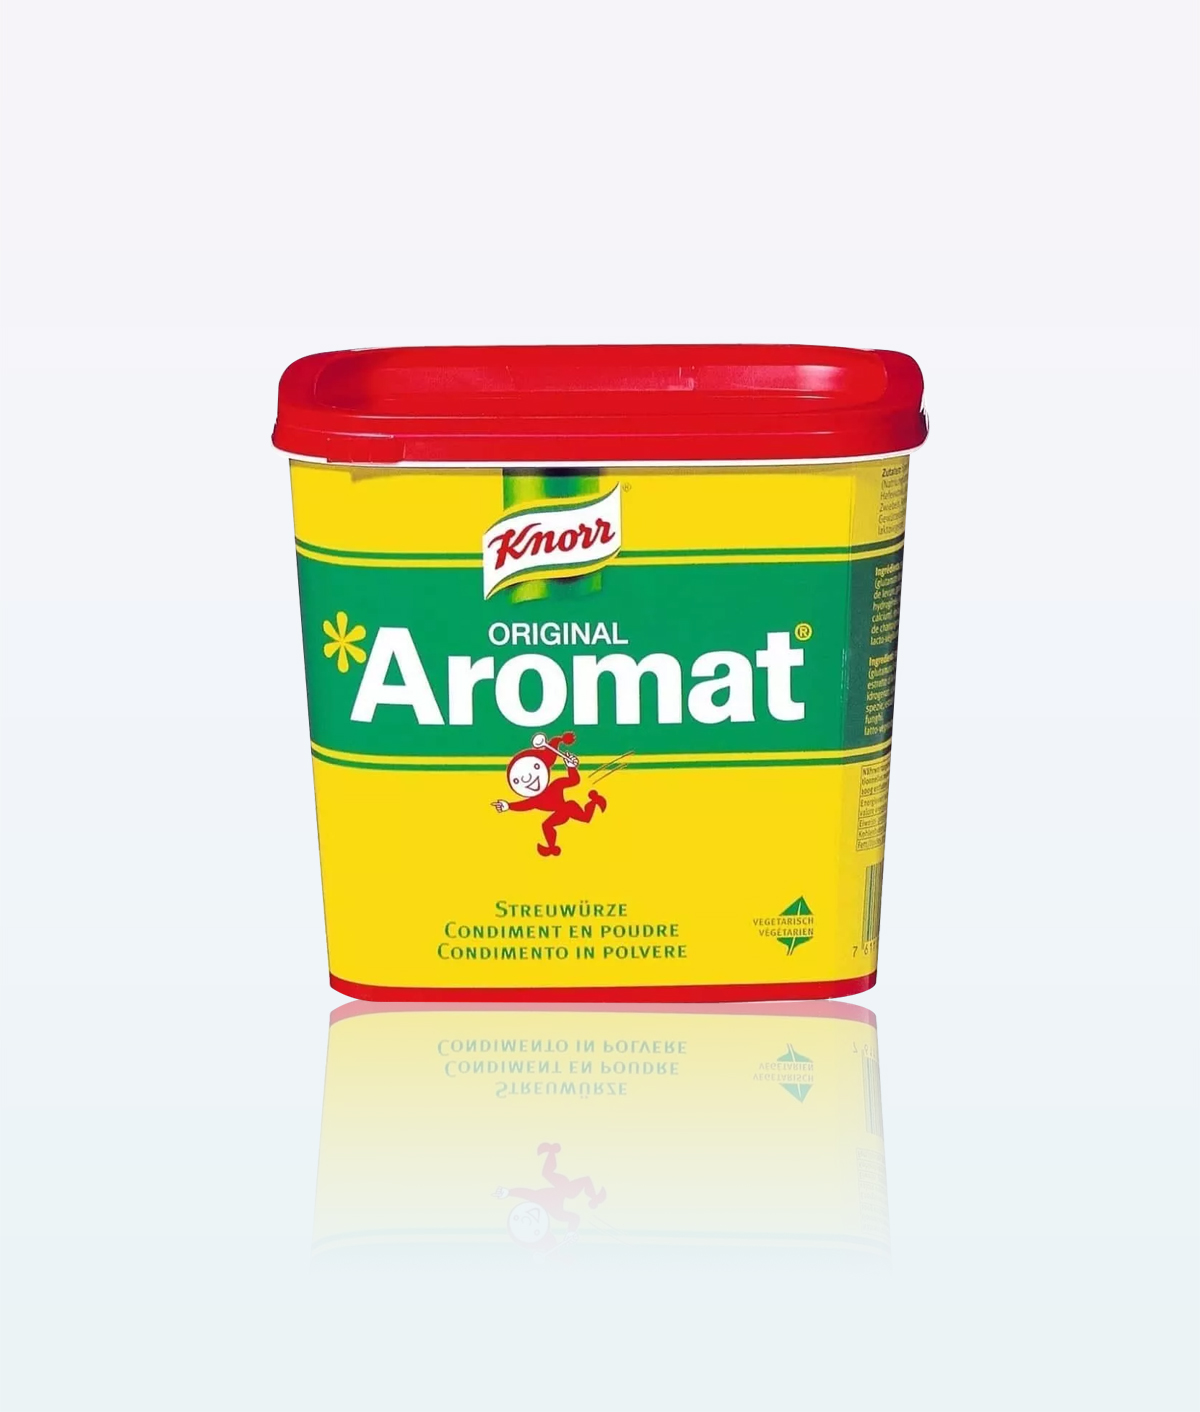 Knorr Aromat Natural 70g